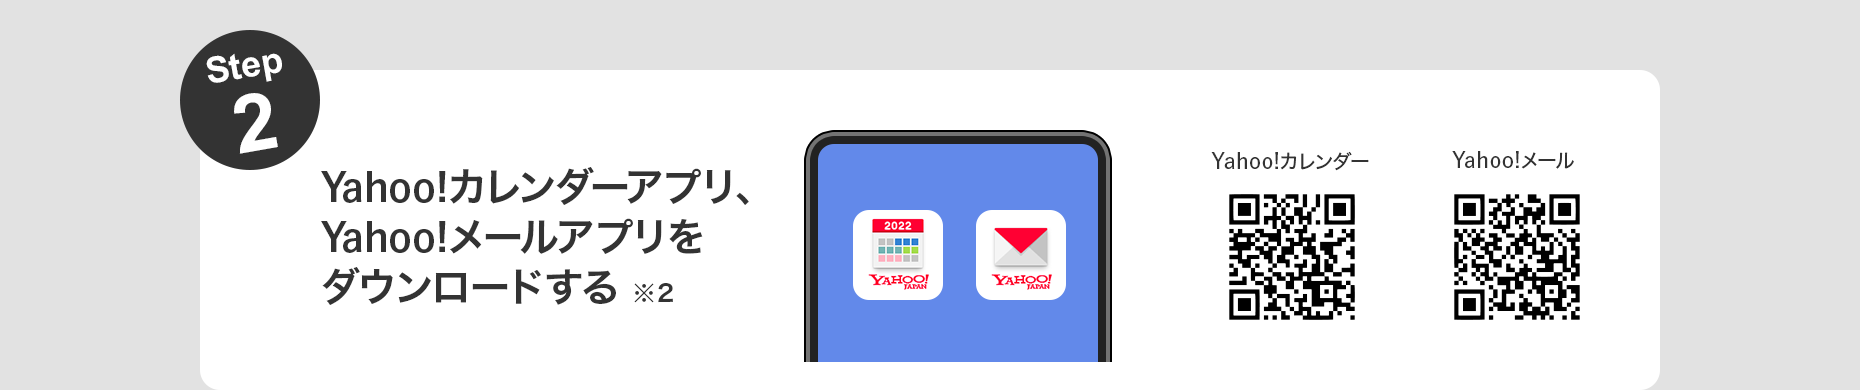 Step2 Yahoo!カレンダーアプリ、Yahoo!メールアプリをダウンロードする ※２